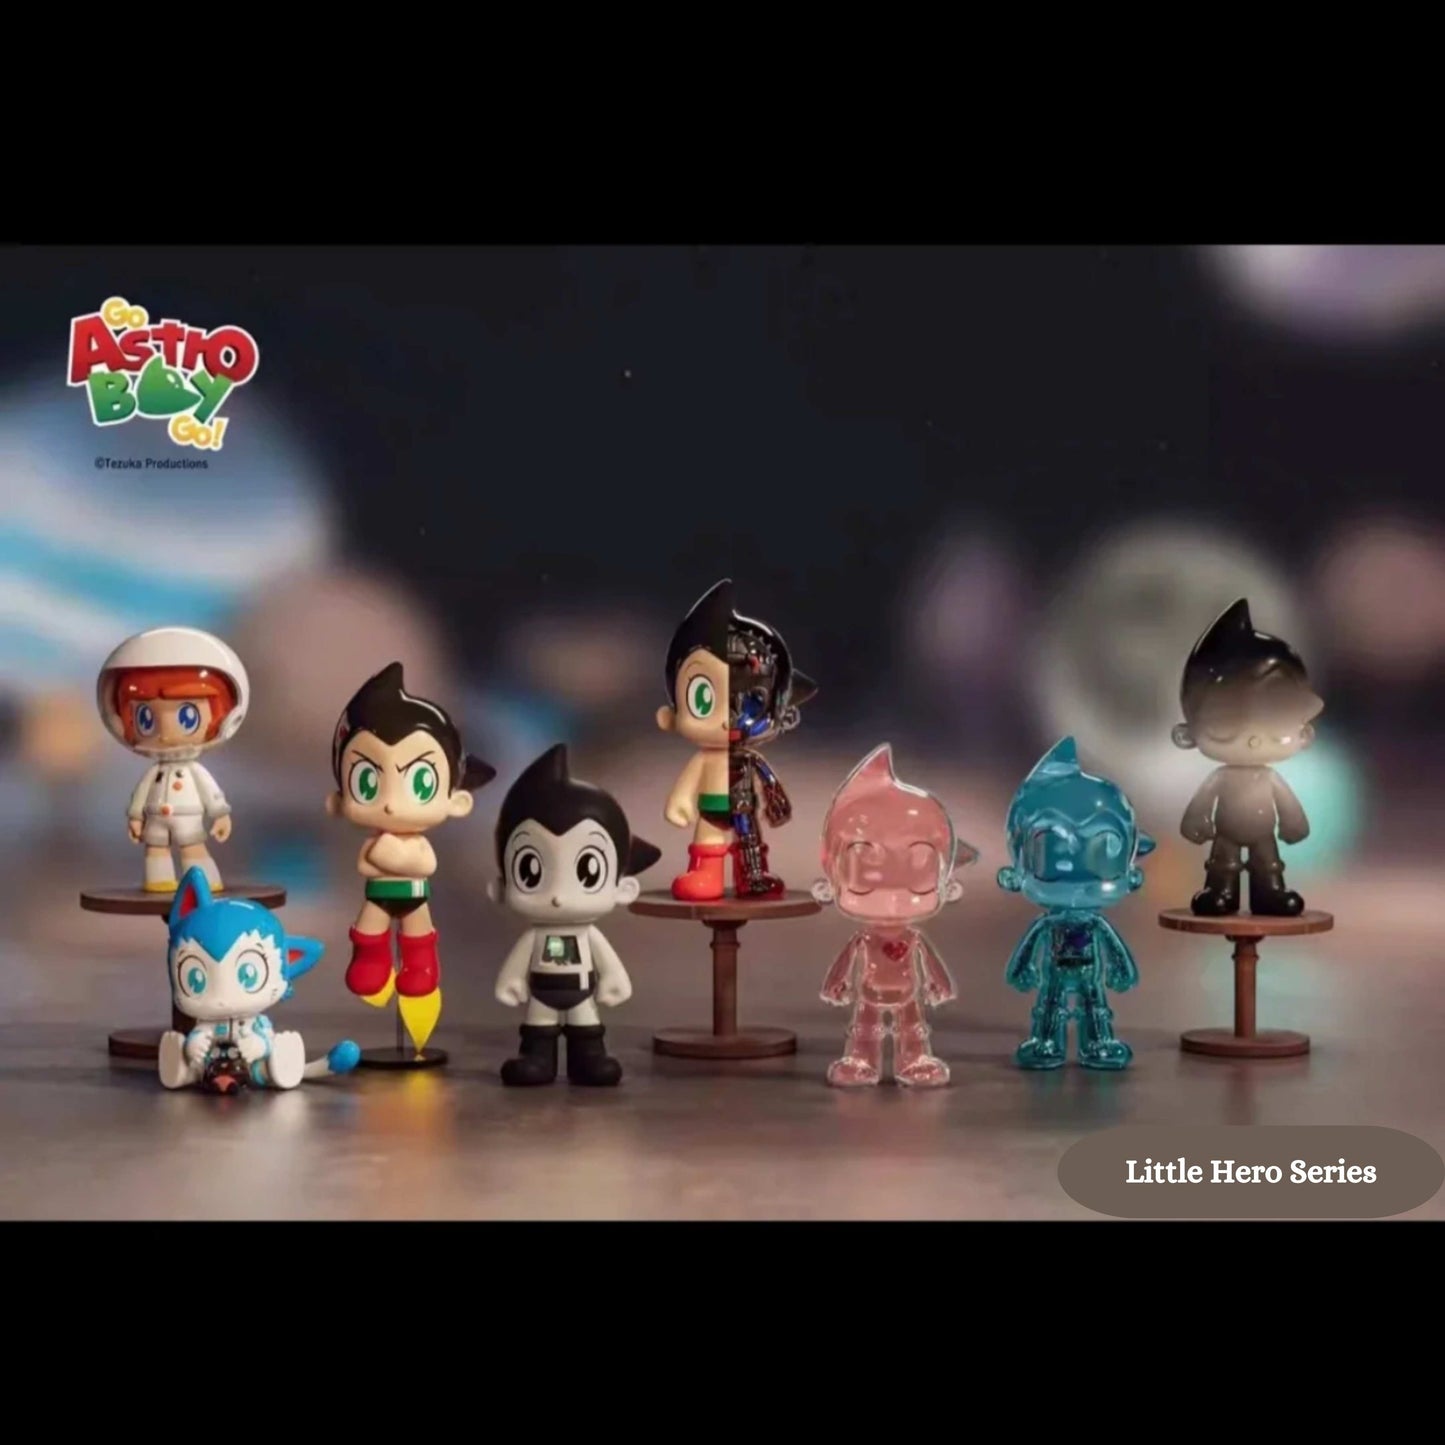 【Restock】Top Toy Astro Boy: Go Astro Boy Go Little Hero Series Blind Box Random Style